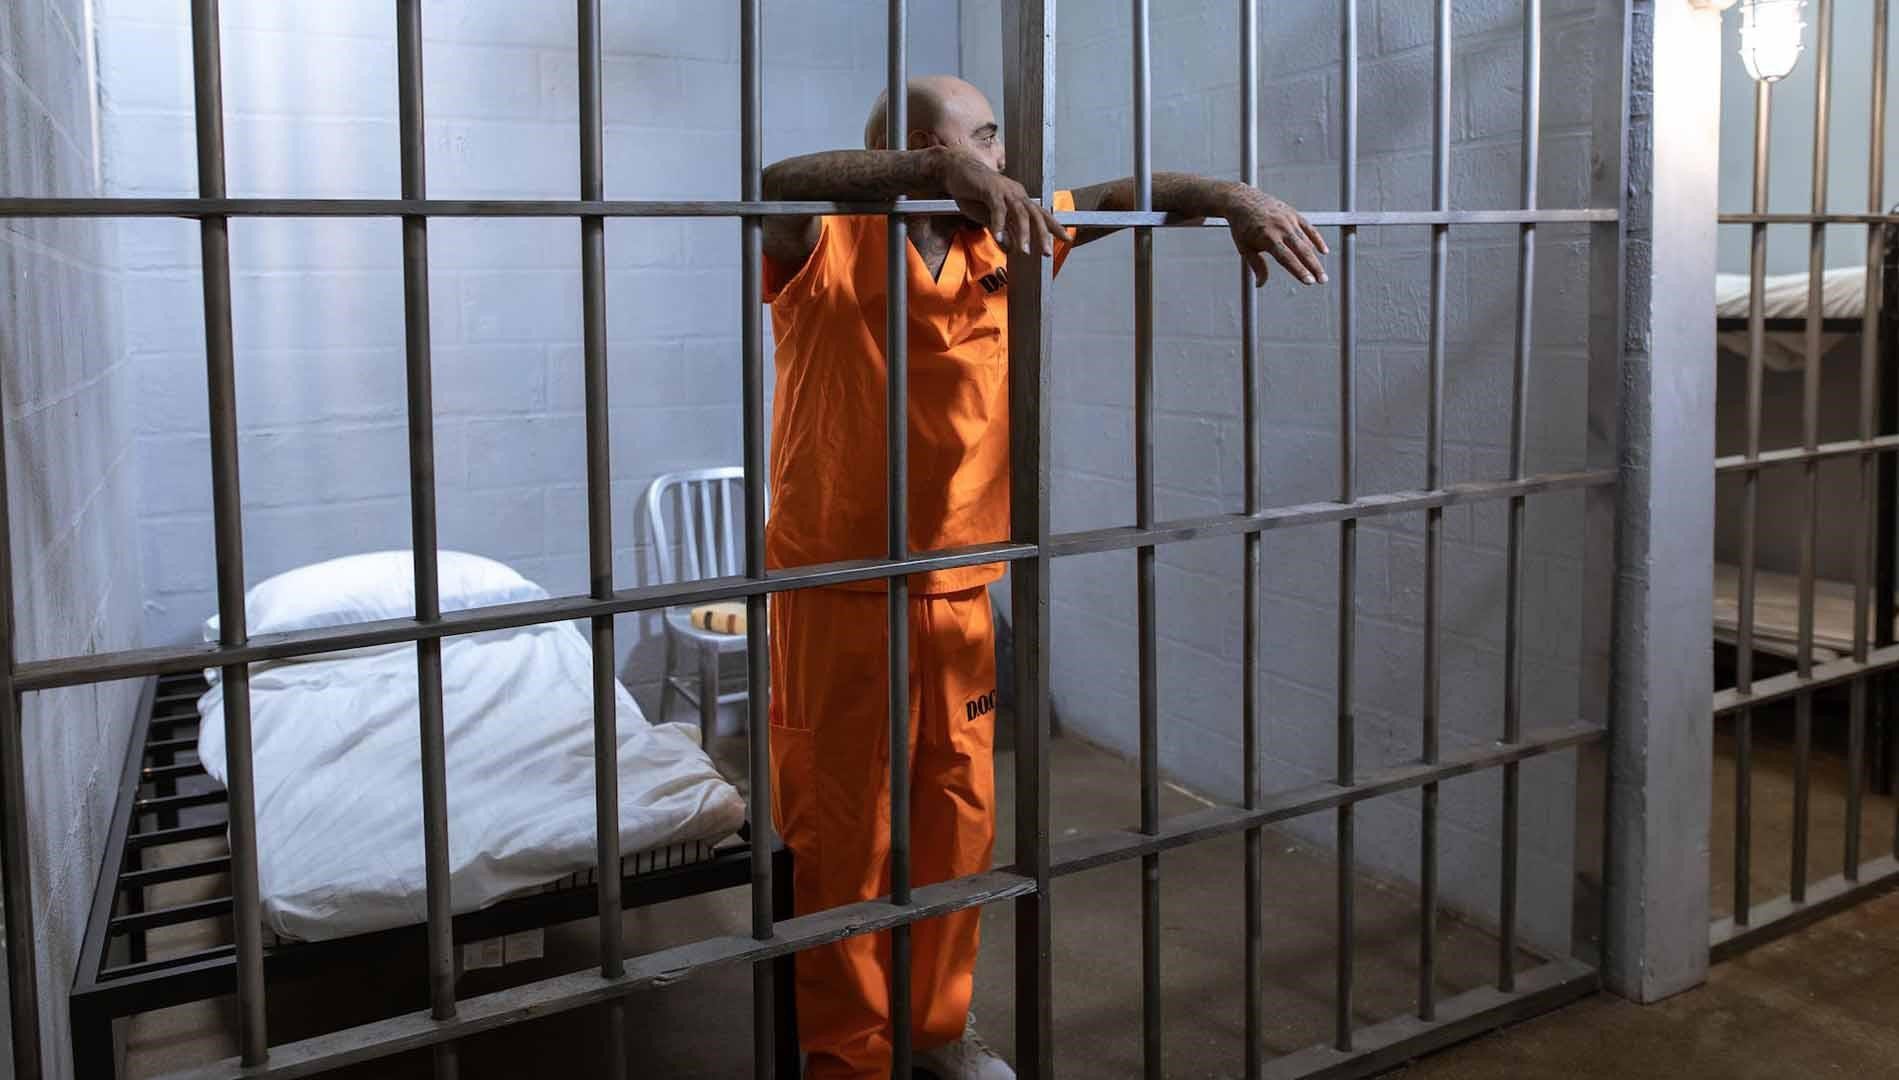 An image of a prisoner wearing orange prison clothes